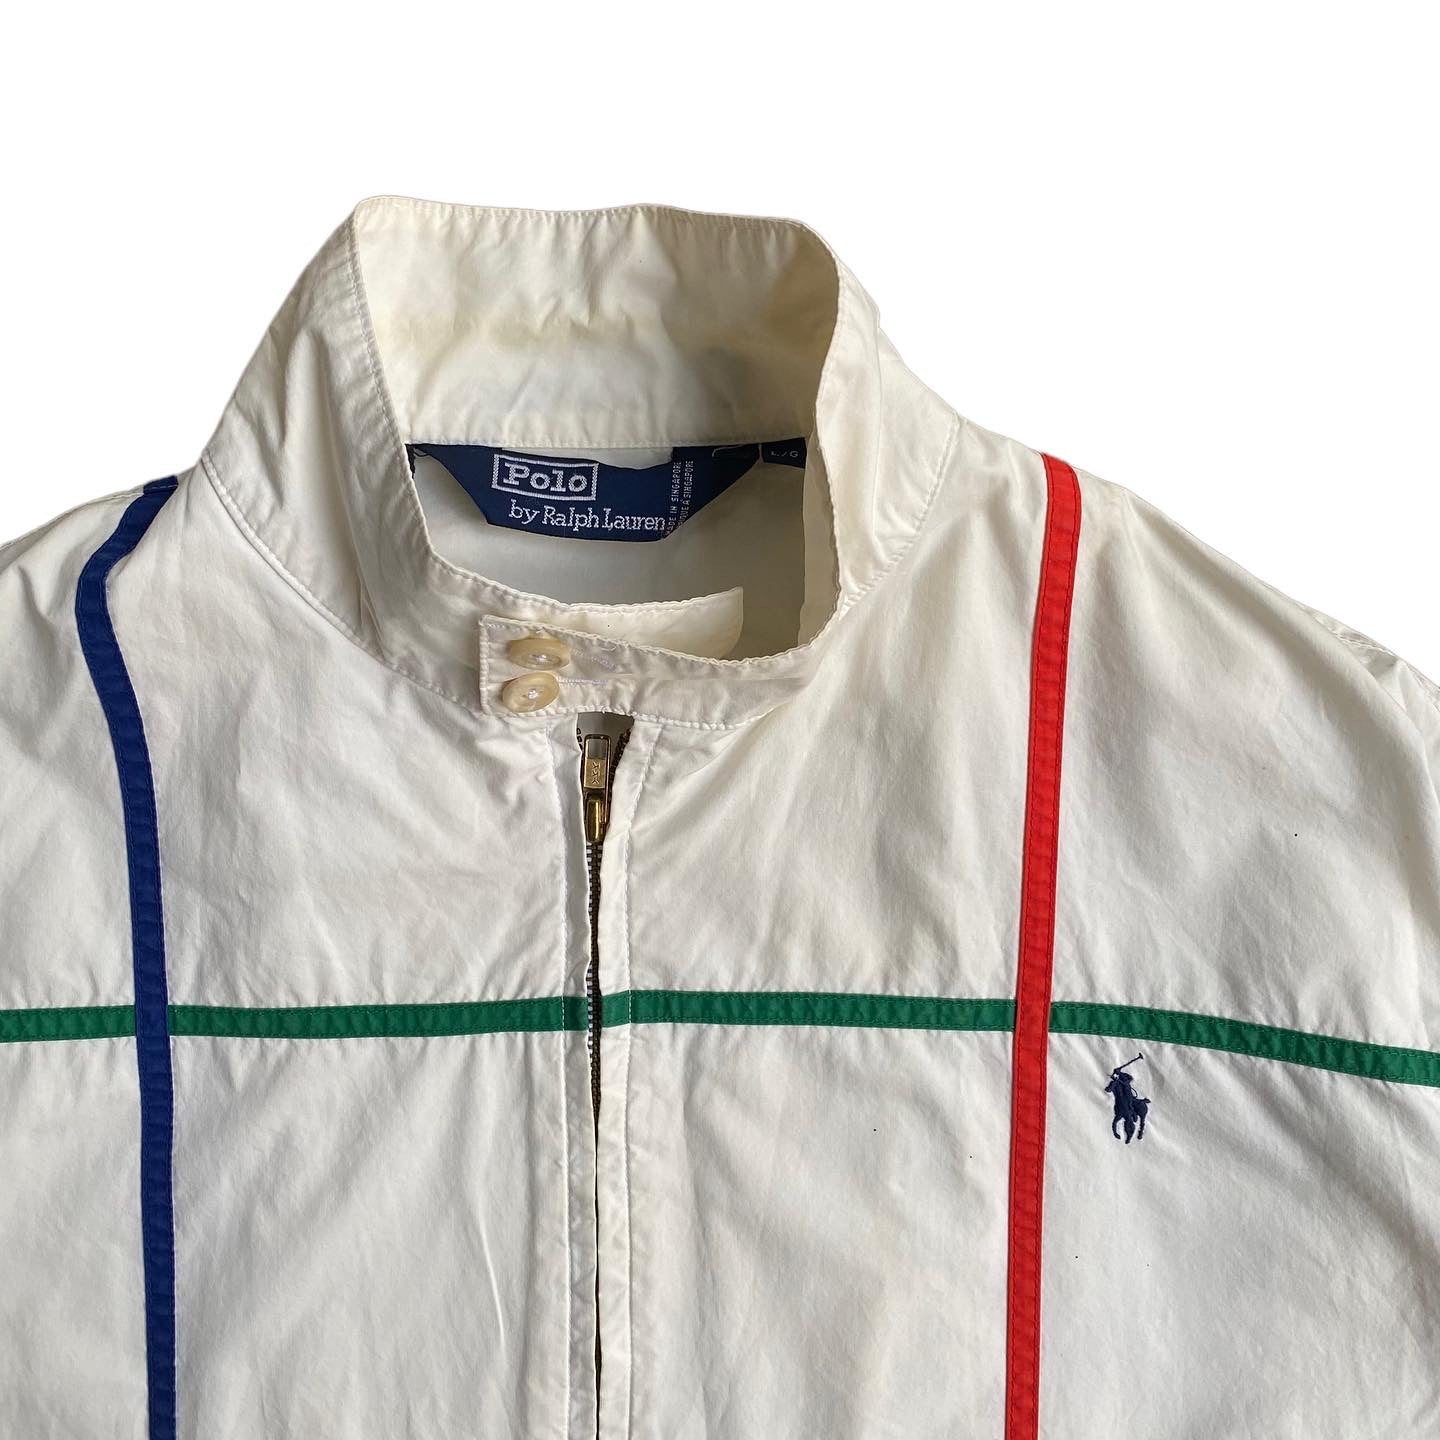 90s Polo ralph lauren light jacket. large